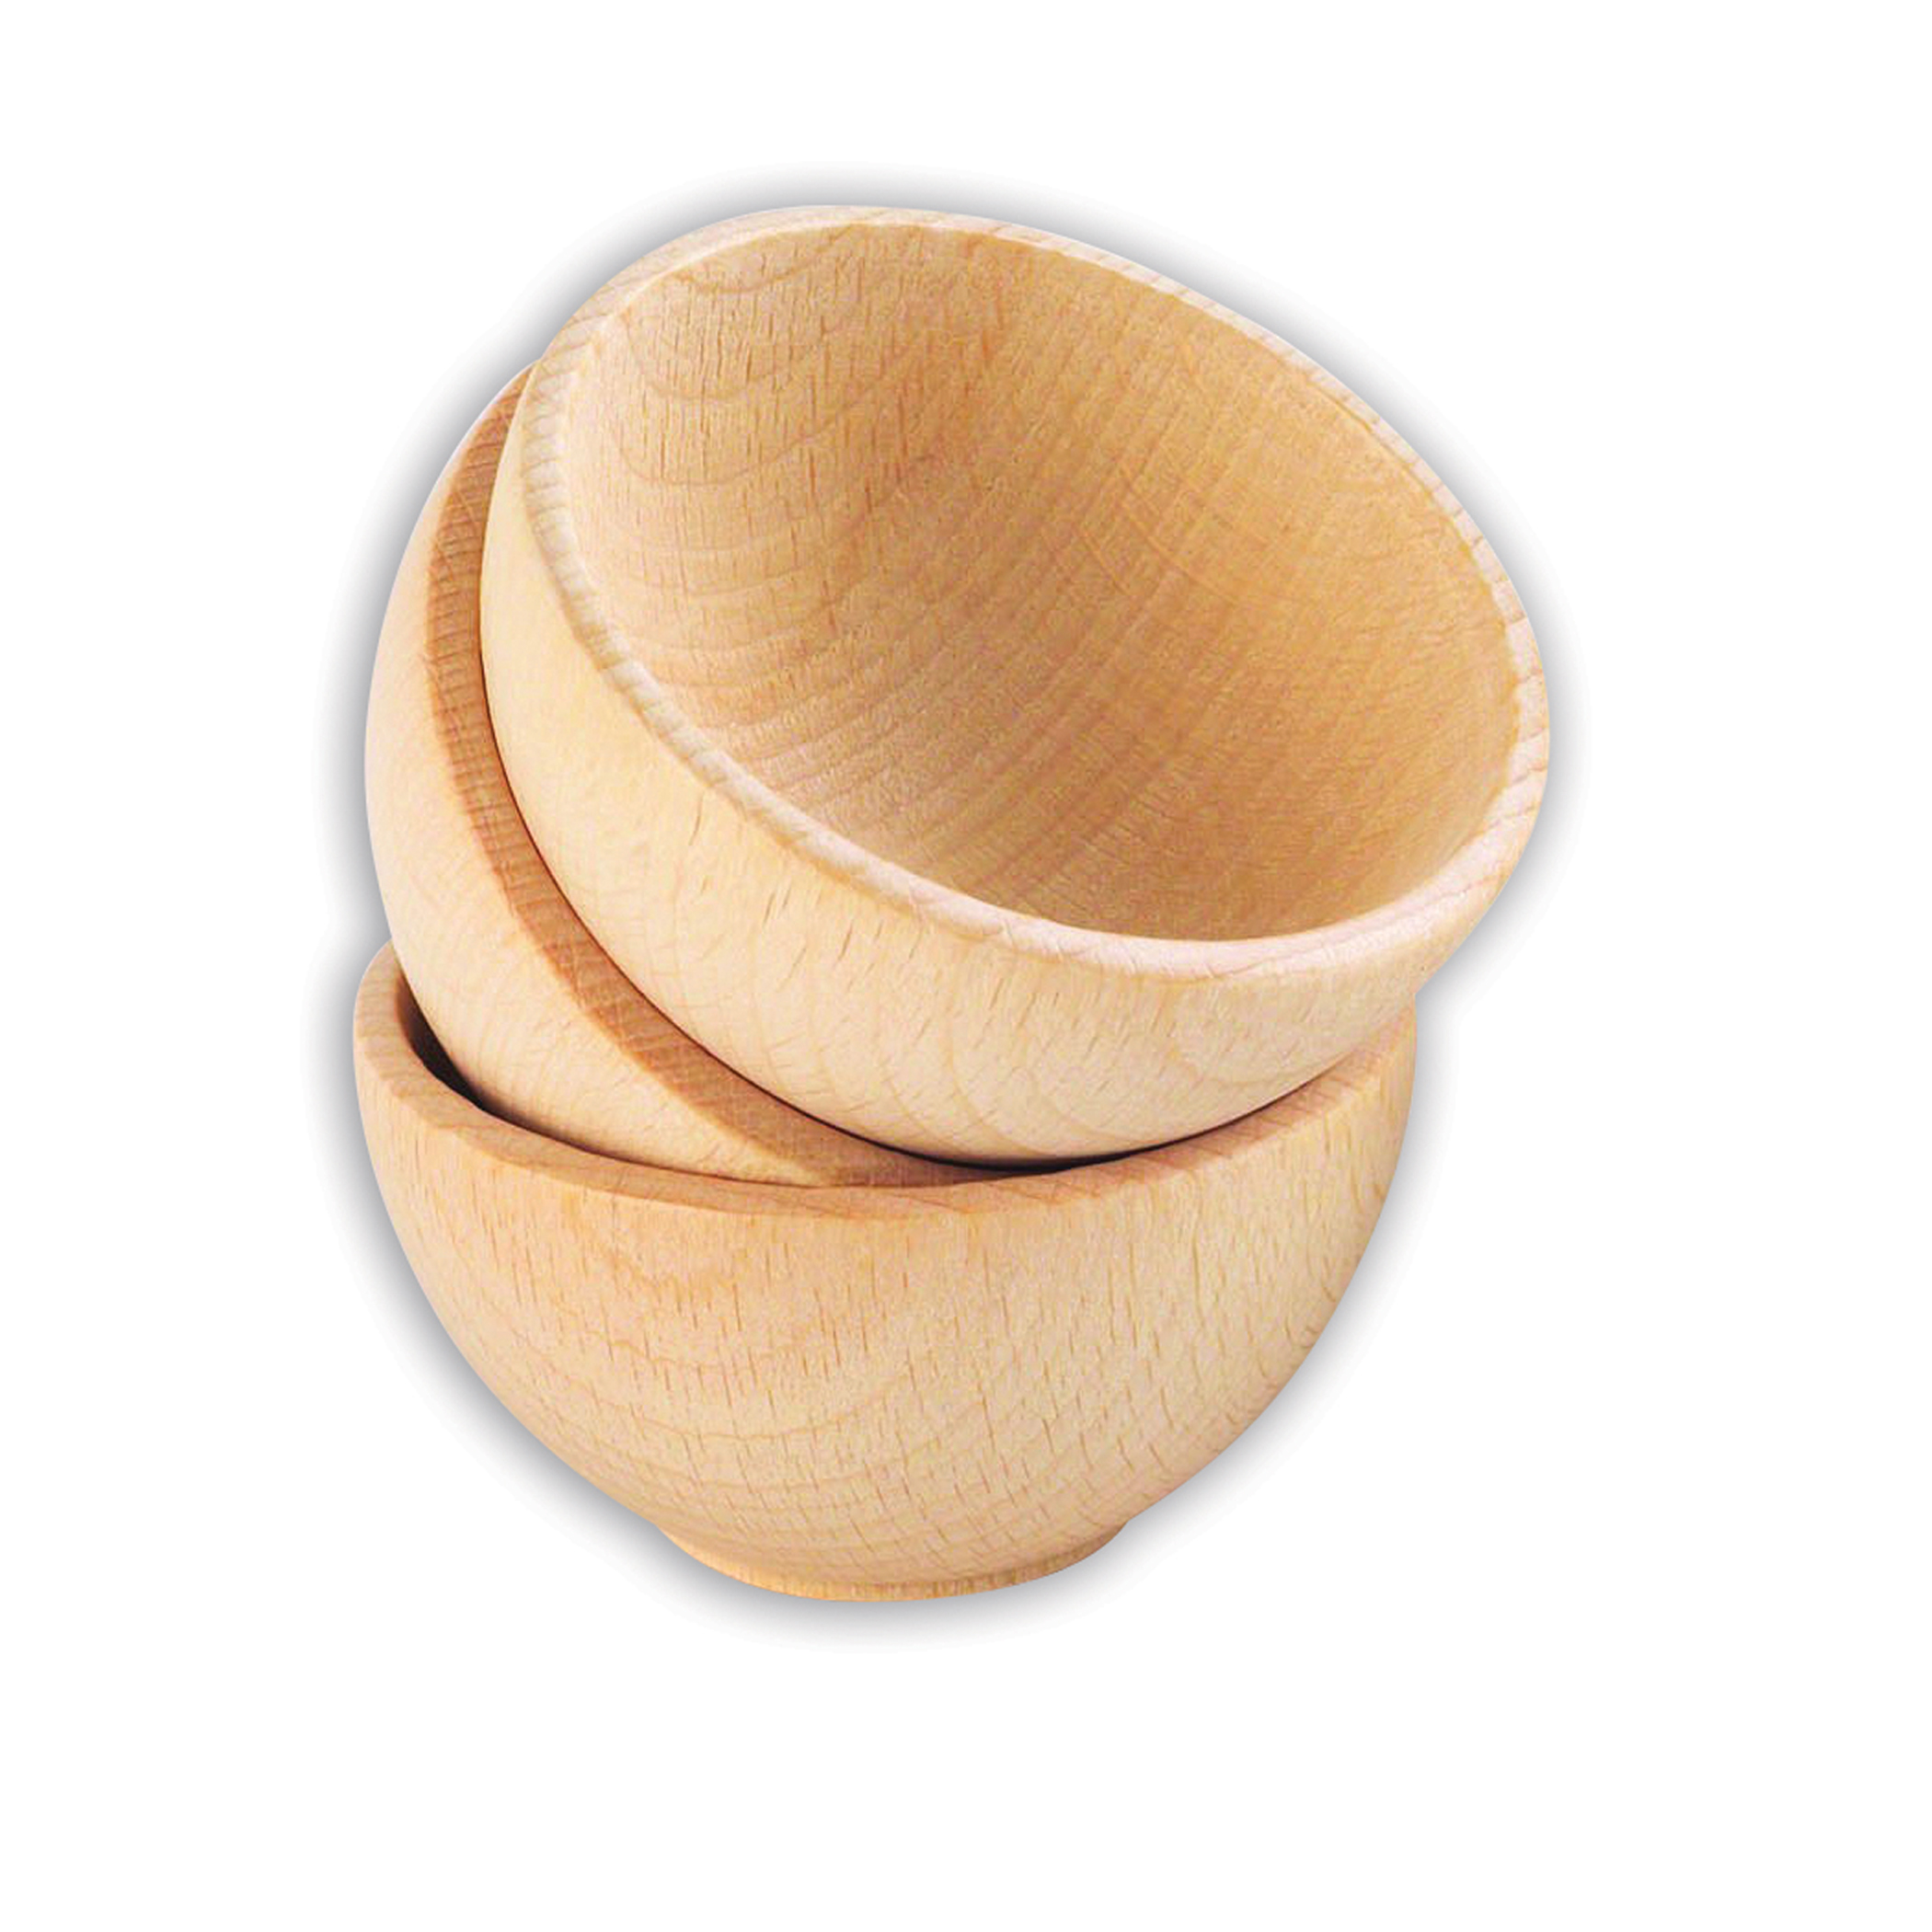 TickiT Wooden Bowls - Set of 3